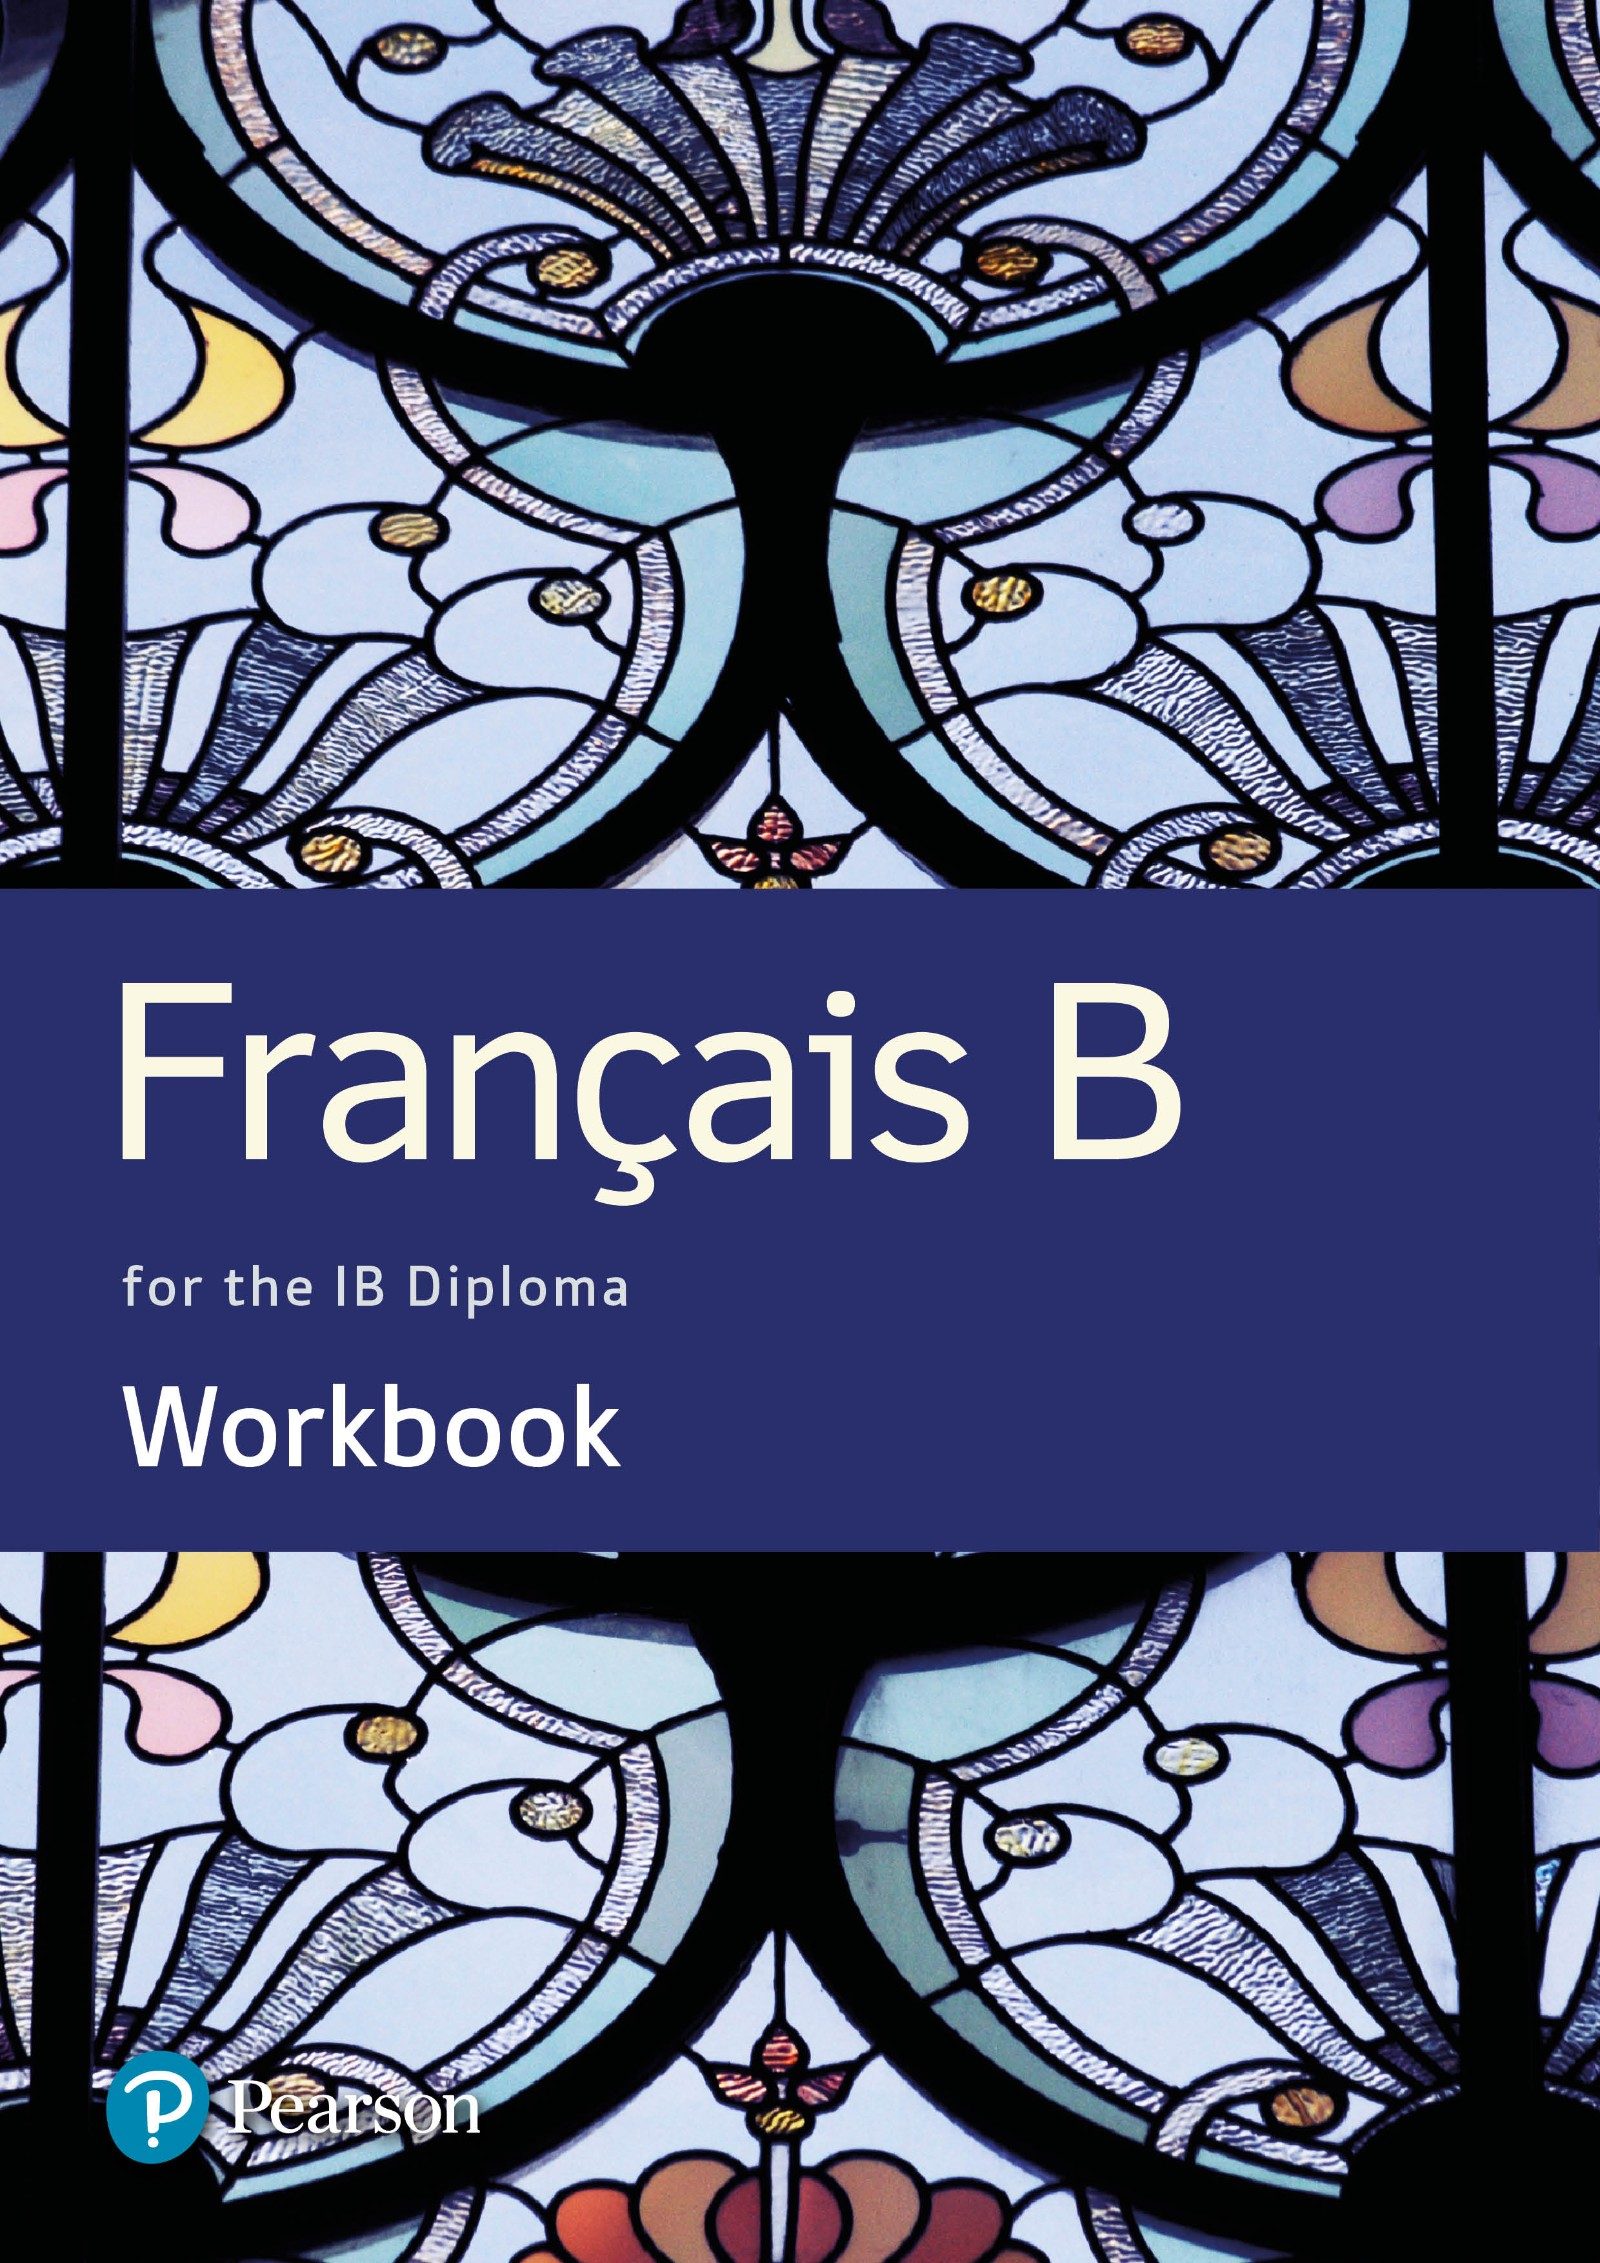 Featured image for “Français B Workbook”